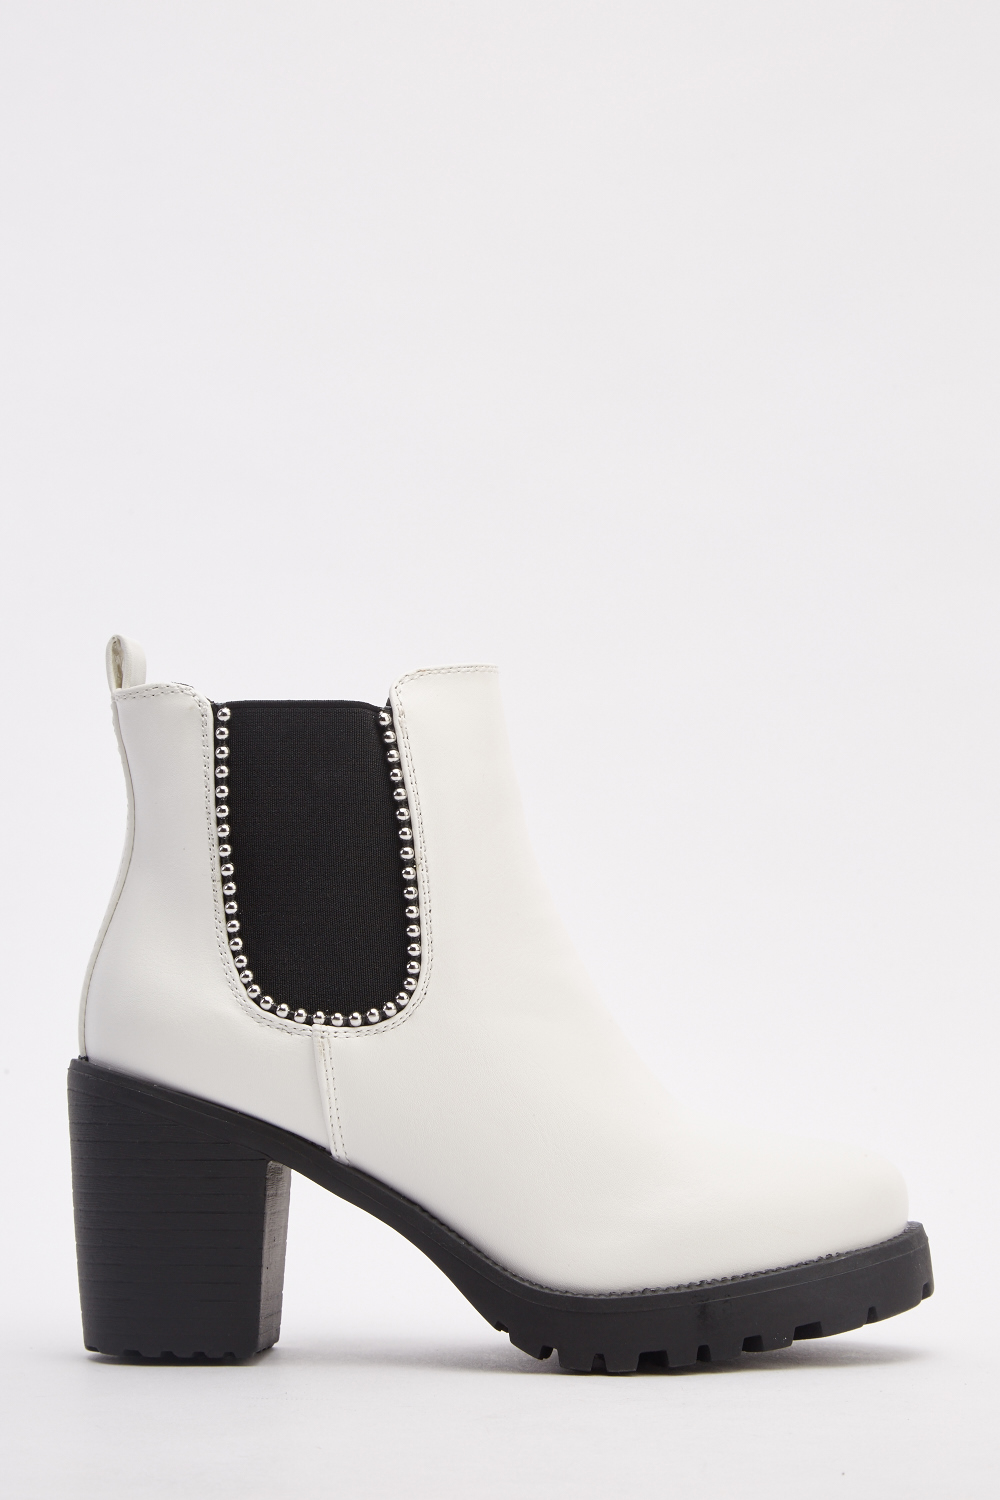 White Block Heel Boots - Just $6